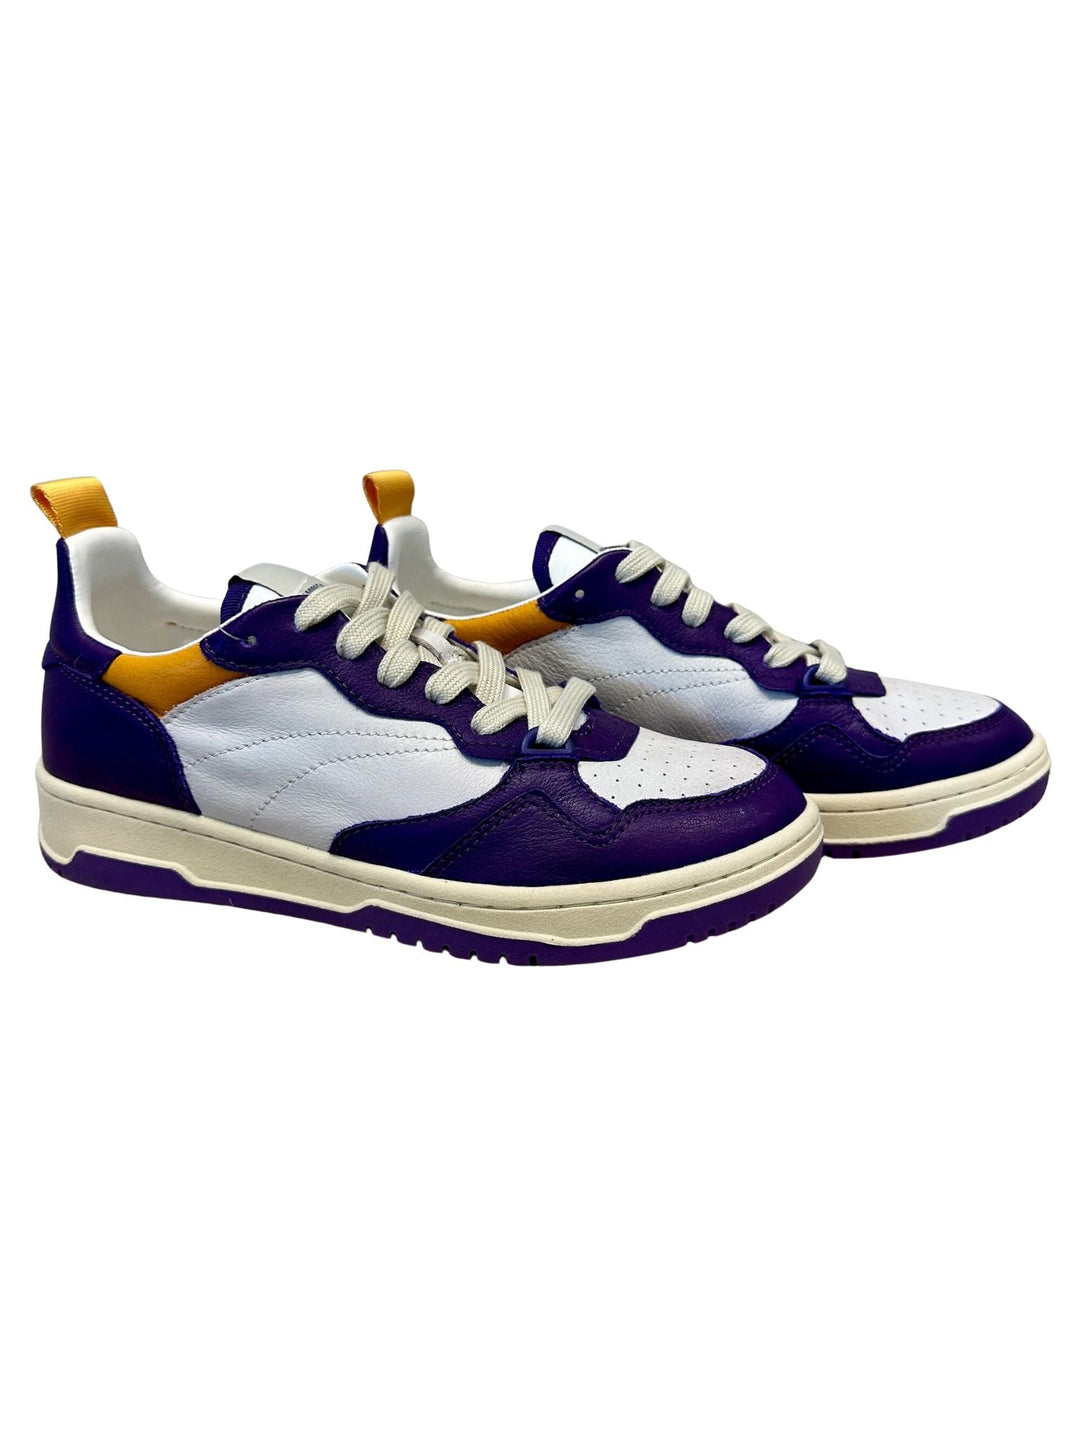 Steve Madden Footwear-Steve Madden Everlie Sneaker - Purple Multi - Leela and Lavender